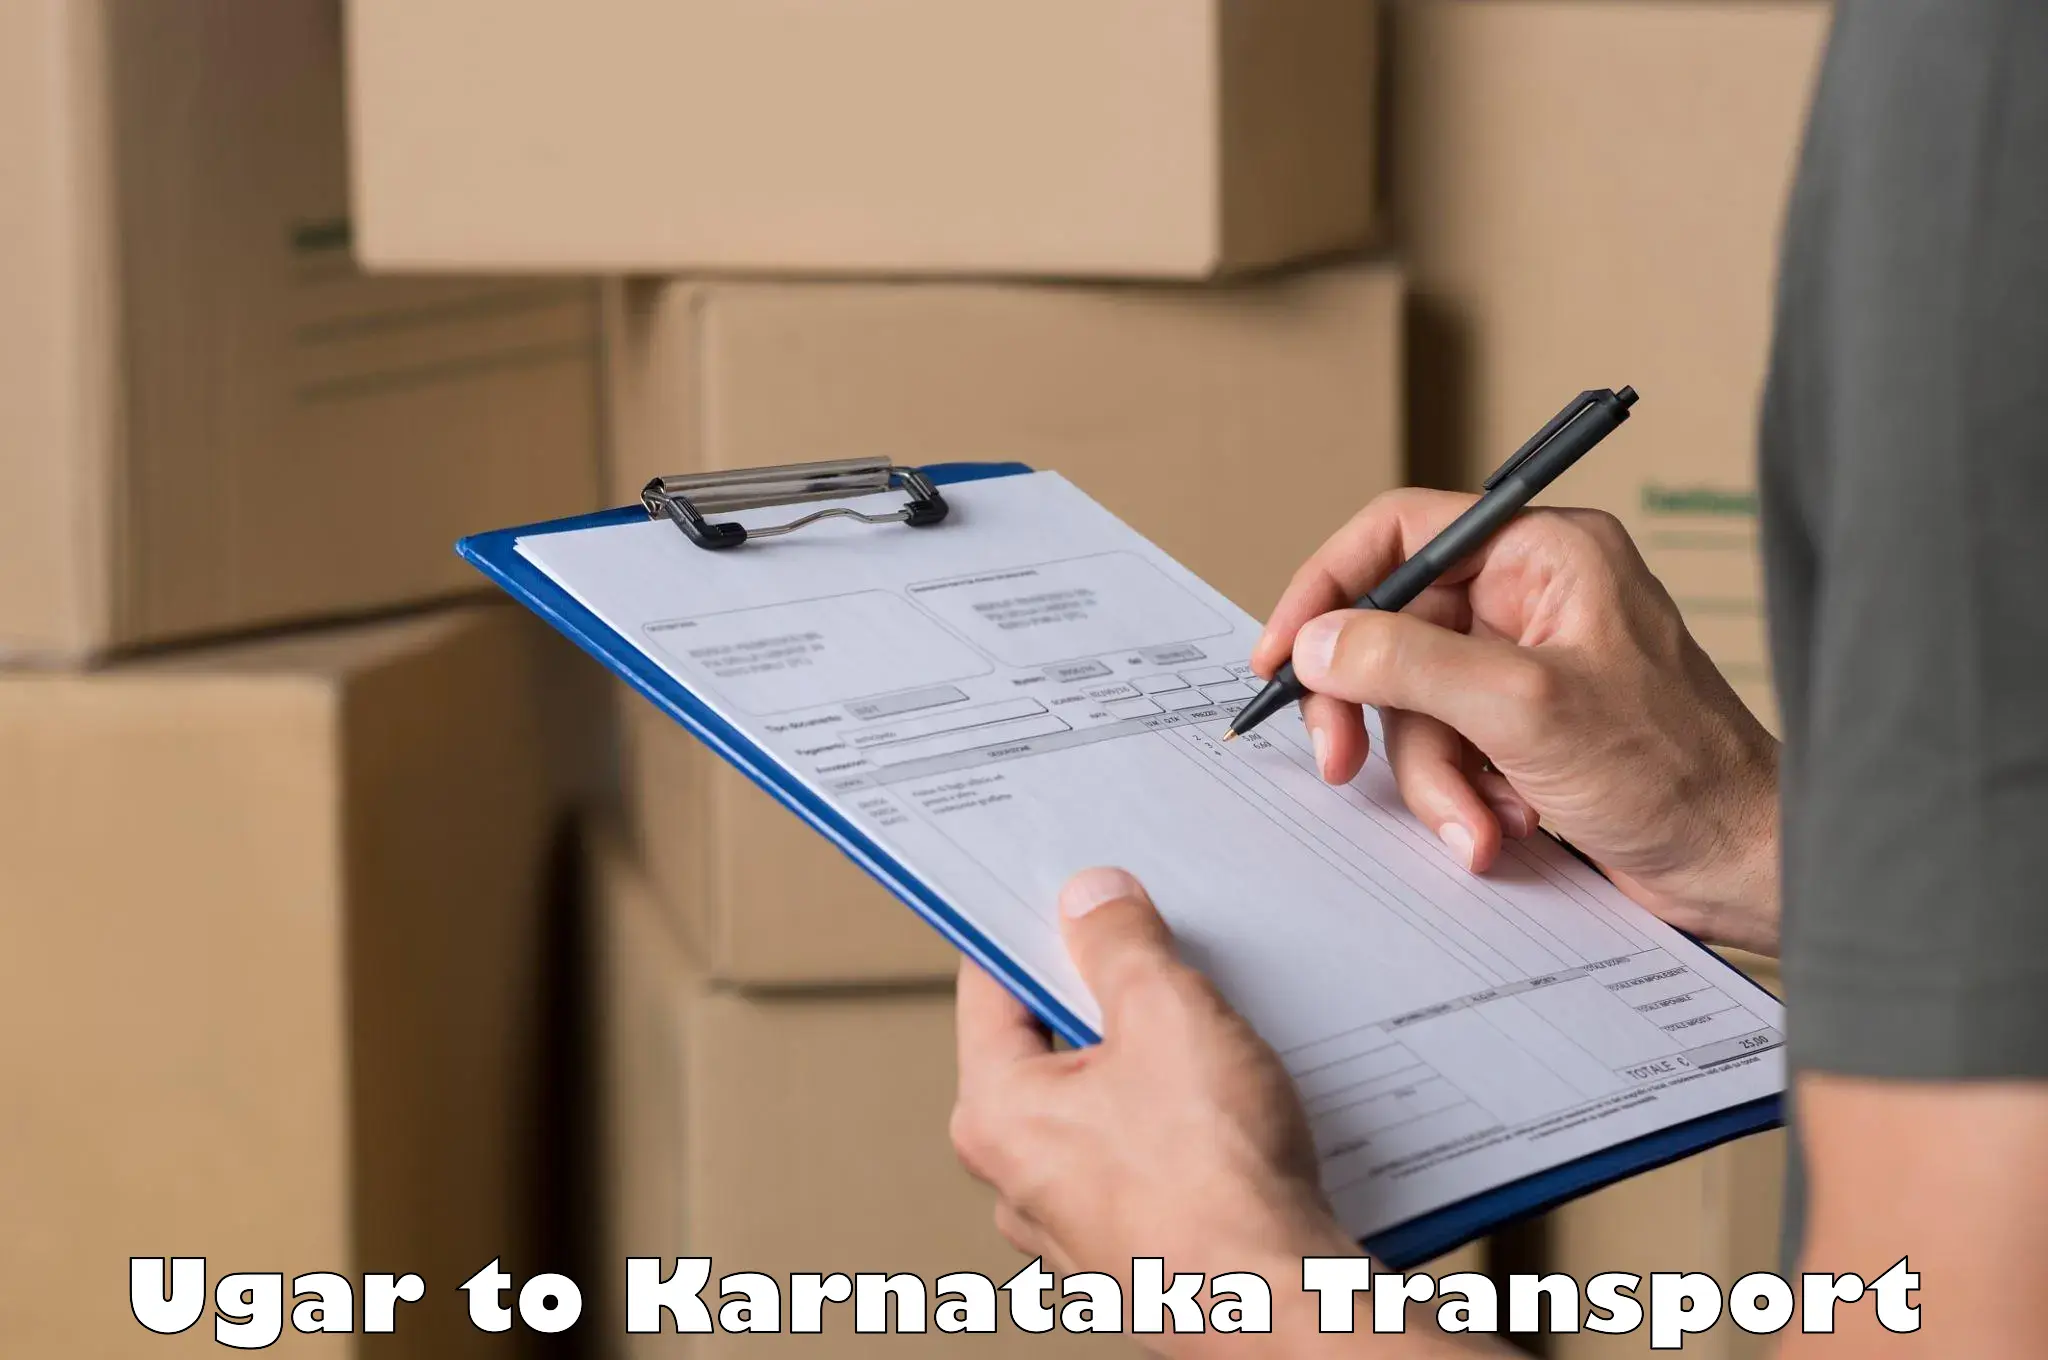 Air freight transport services in Ugar to Karnataka